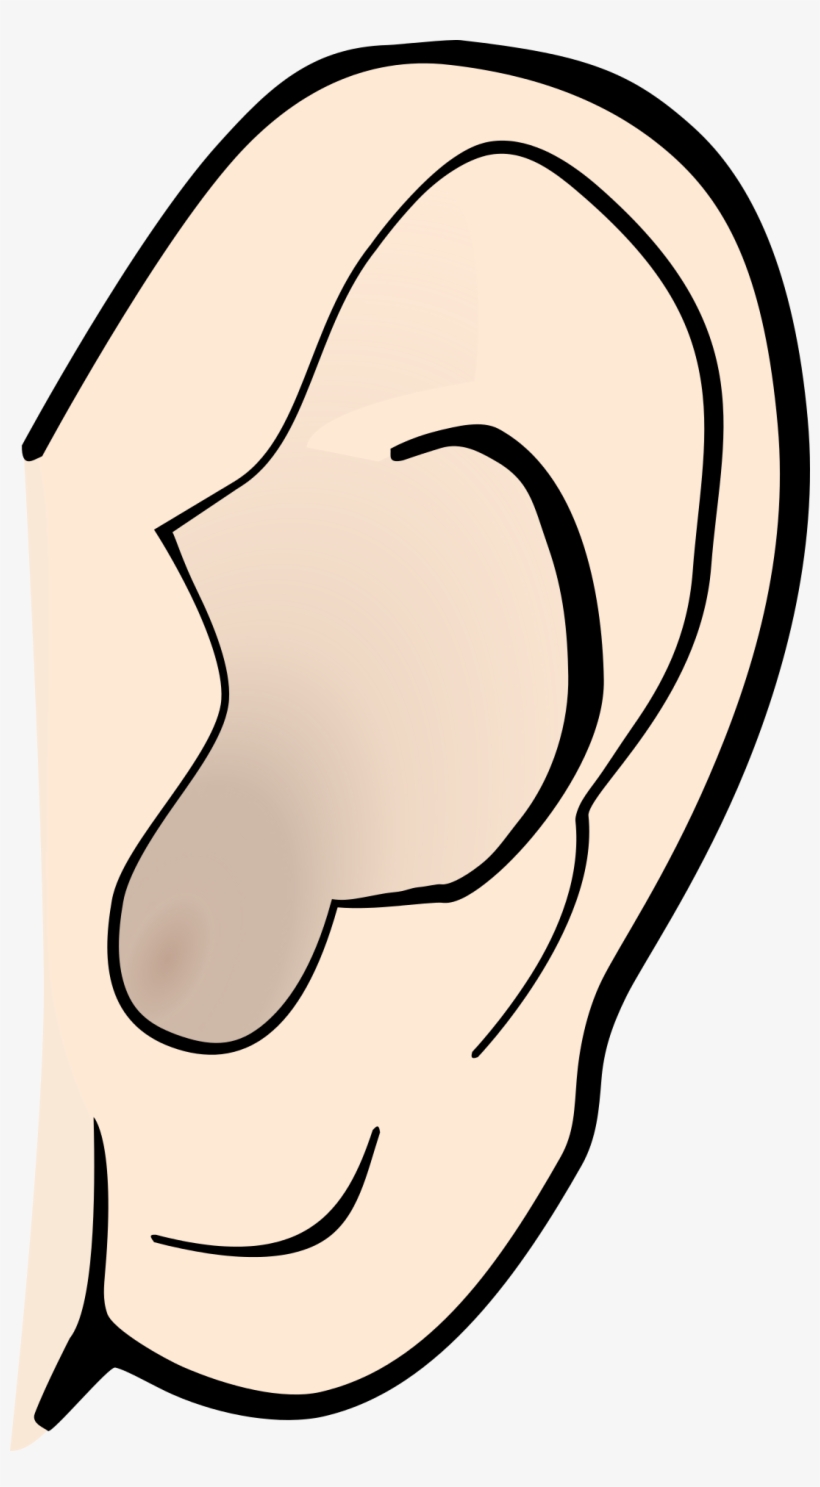 Ears Listening Png - Clip Art Ear, transparent png #8441597